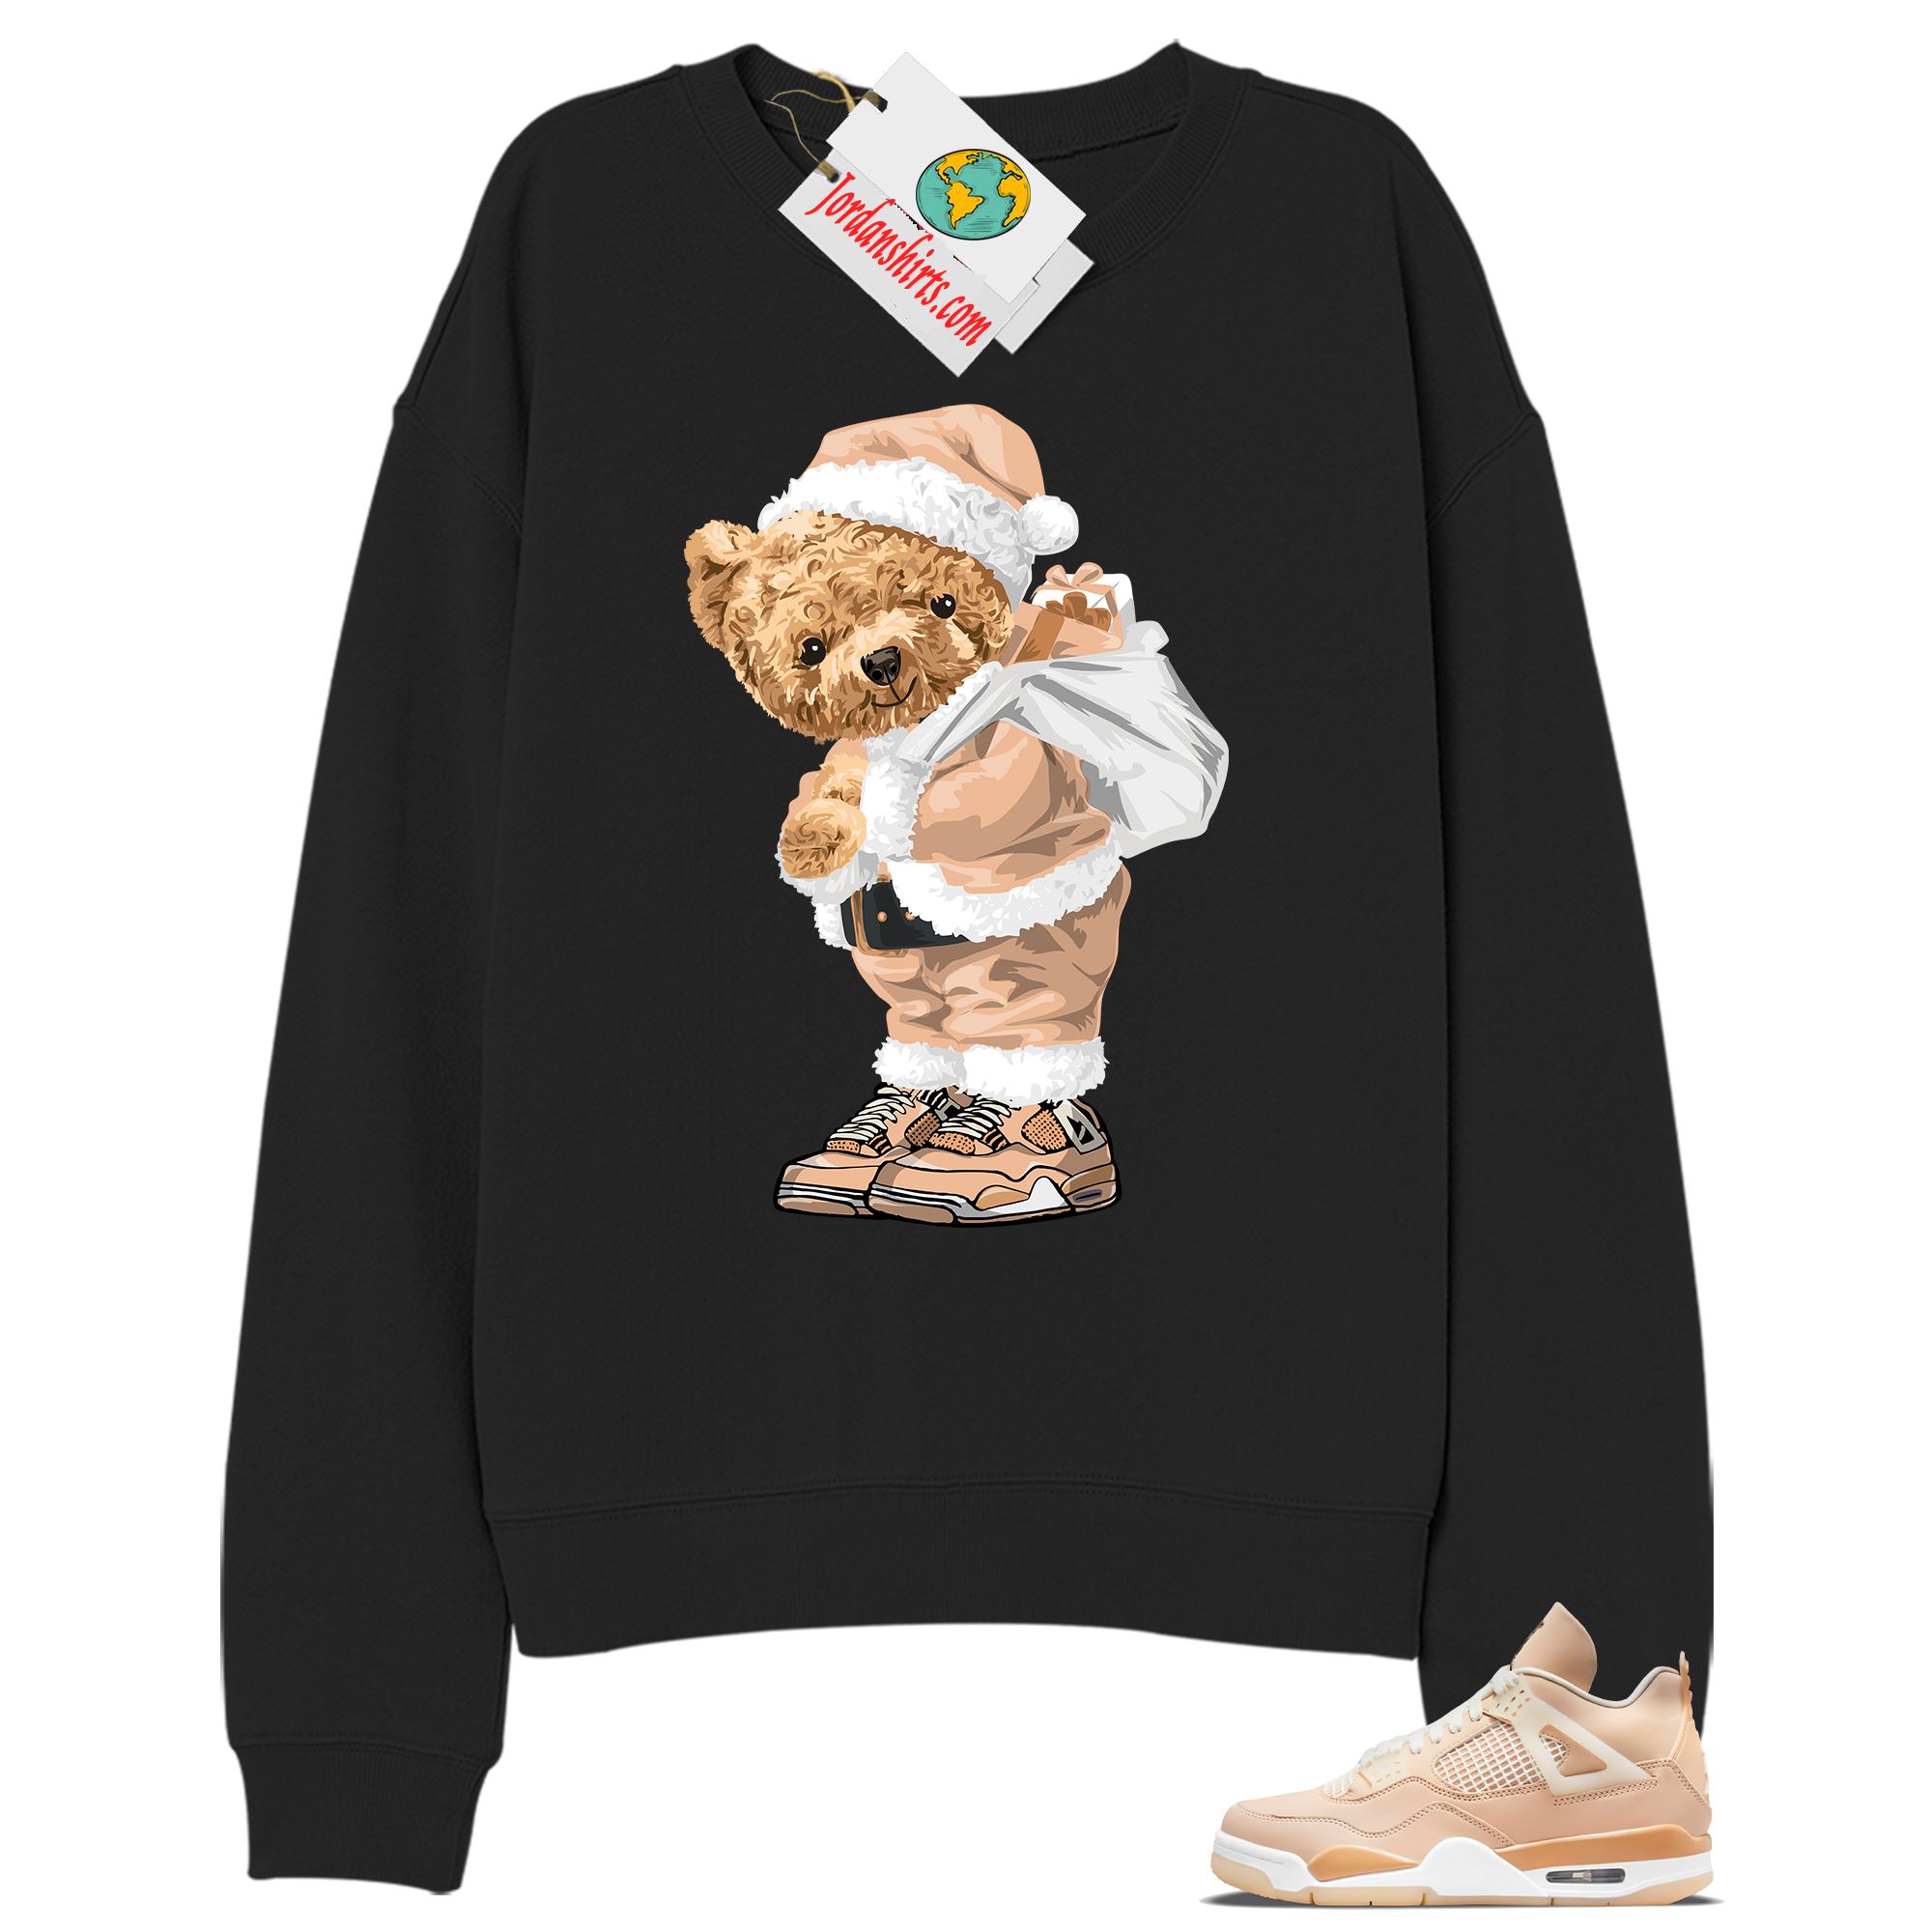 Jordan 4 Sweatshirt, Teddy Bear In Santa Claus Black Sweatshirt Air Jordan 4 Shimmer 4s Plus Size Up To 5xl